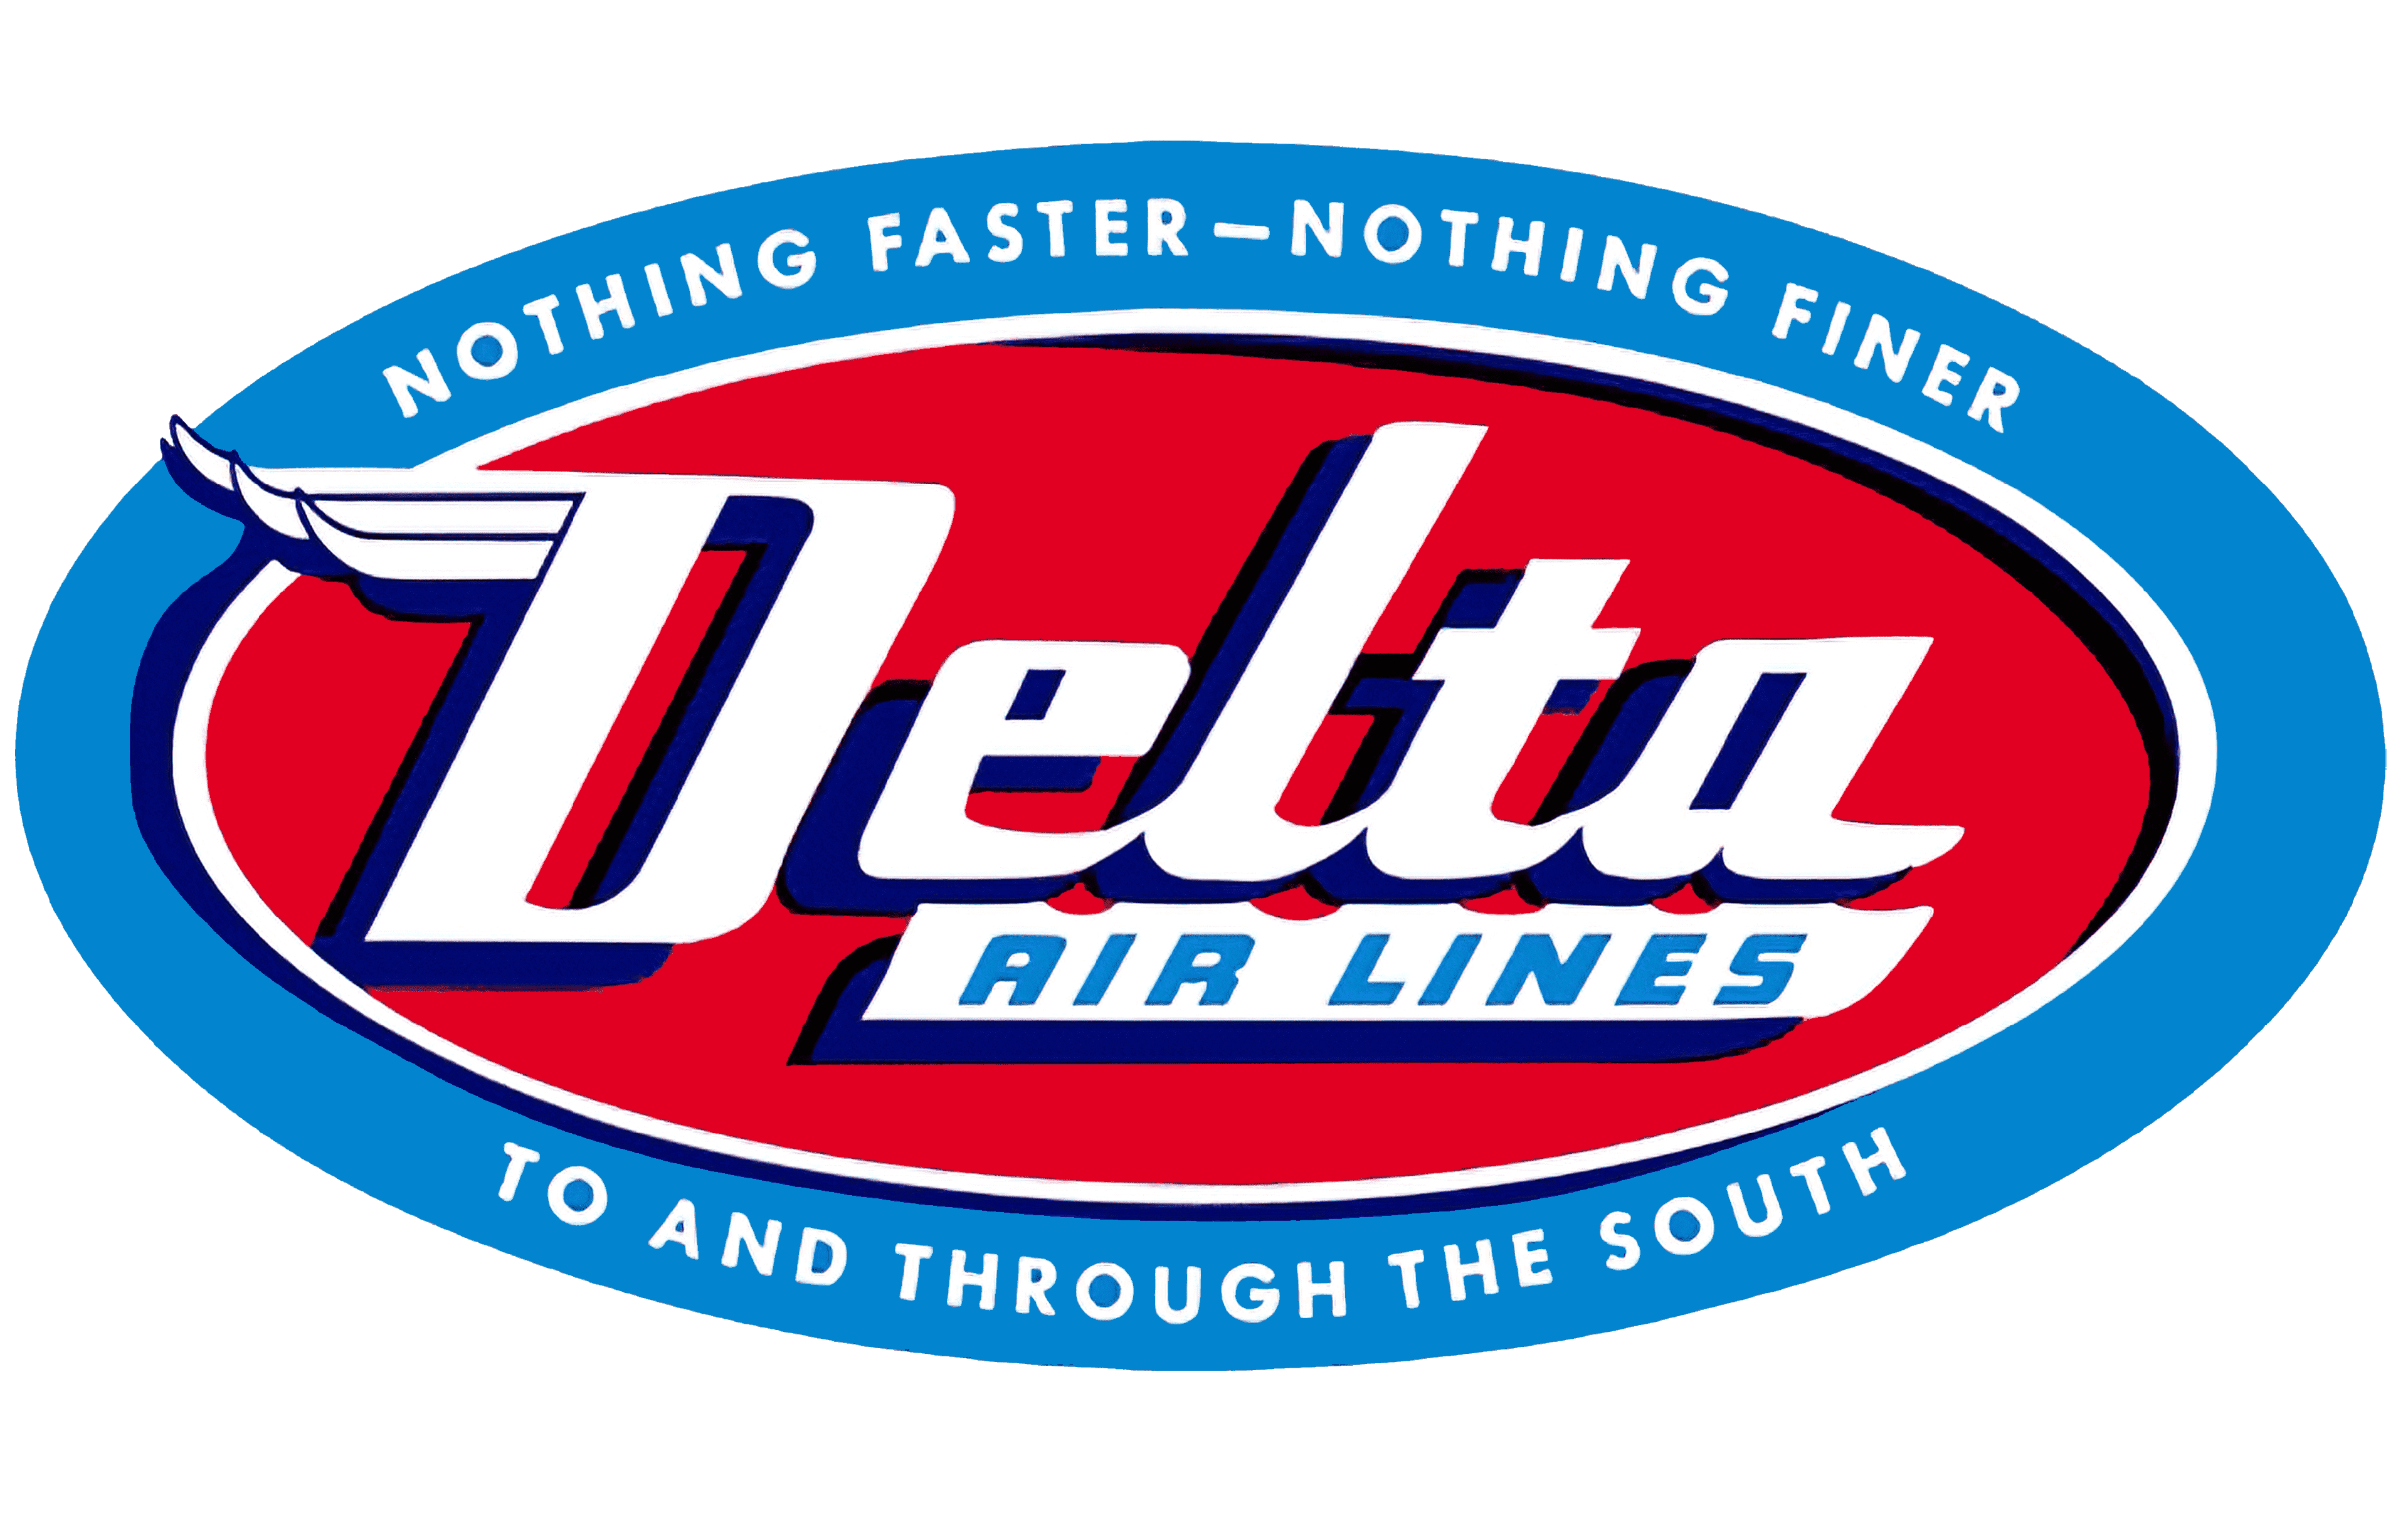 delta airlines logo png